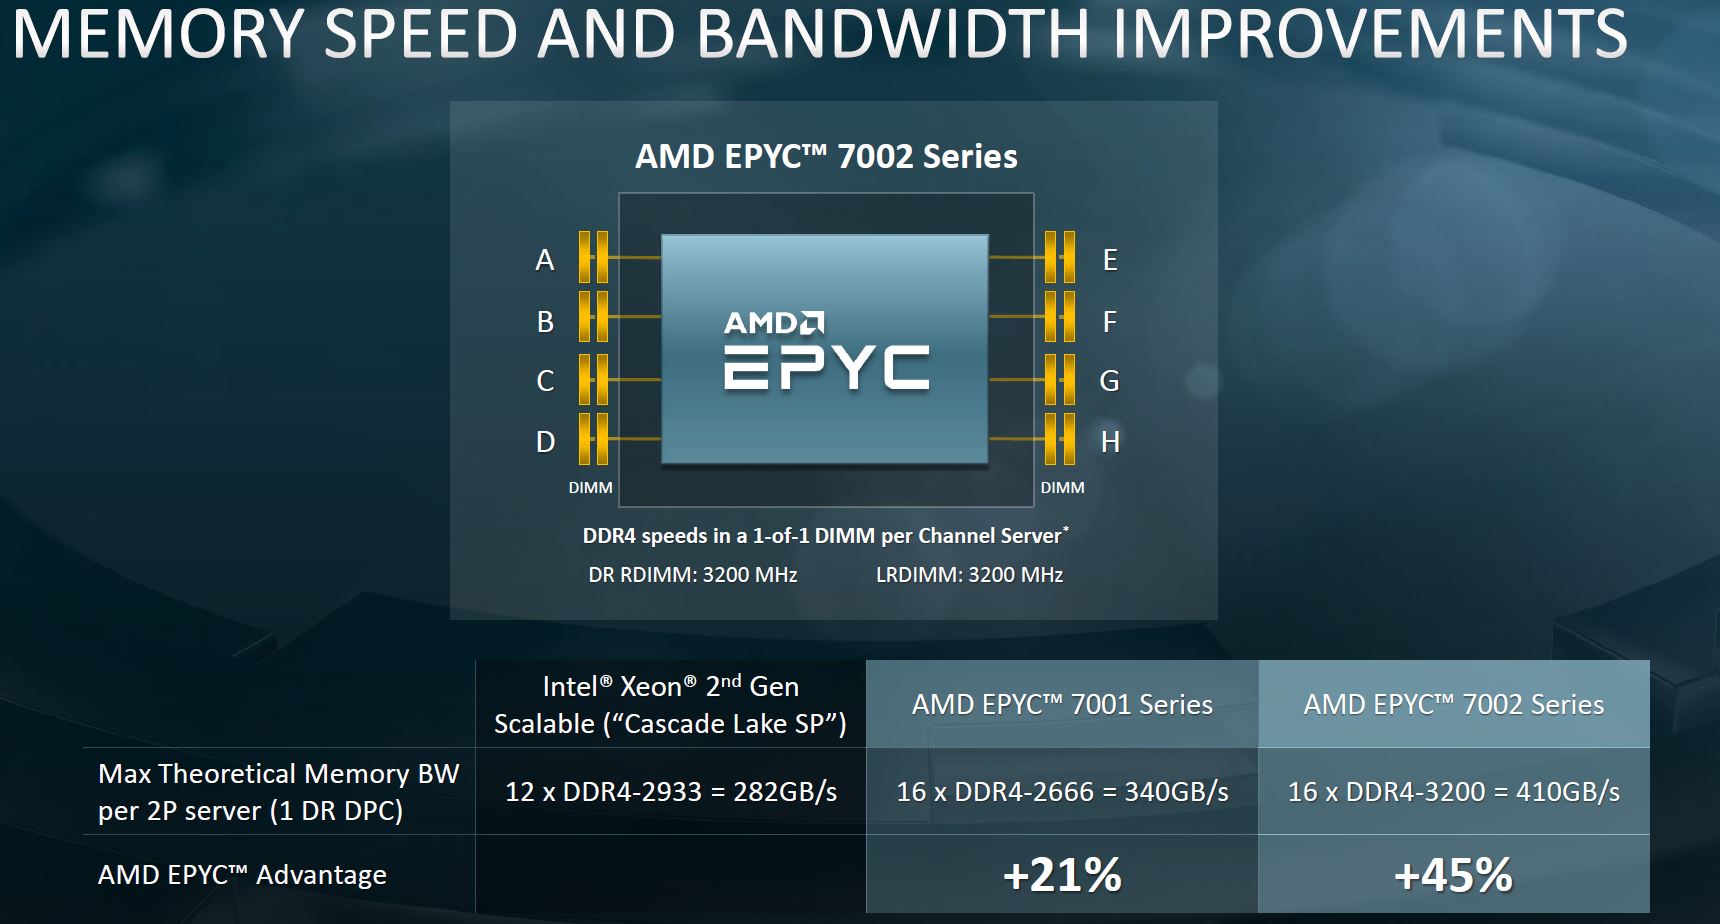 AMD-EPYC-7002-Architecture-Memory-Speed-and-Bandwidth-Benefits.jpg